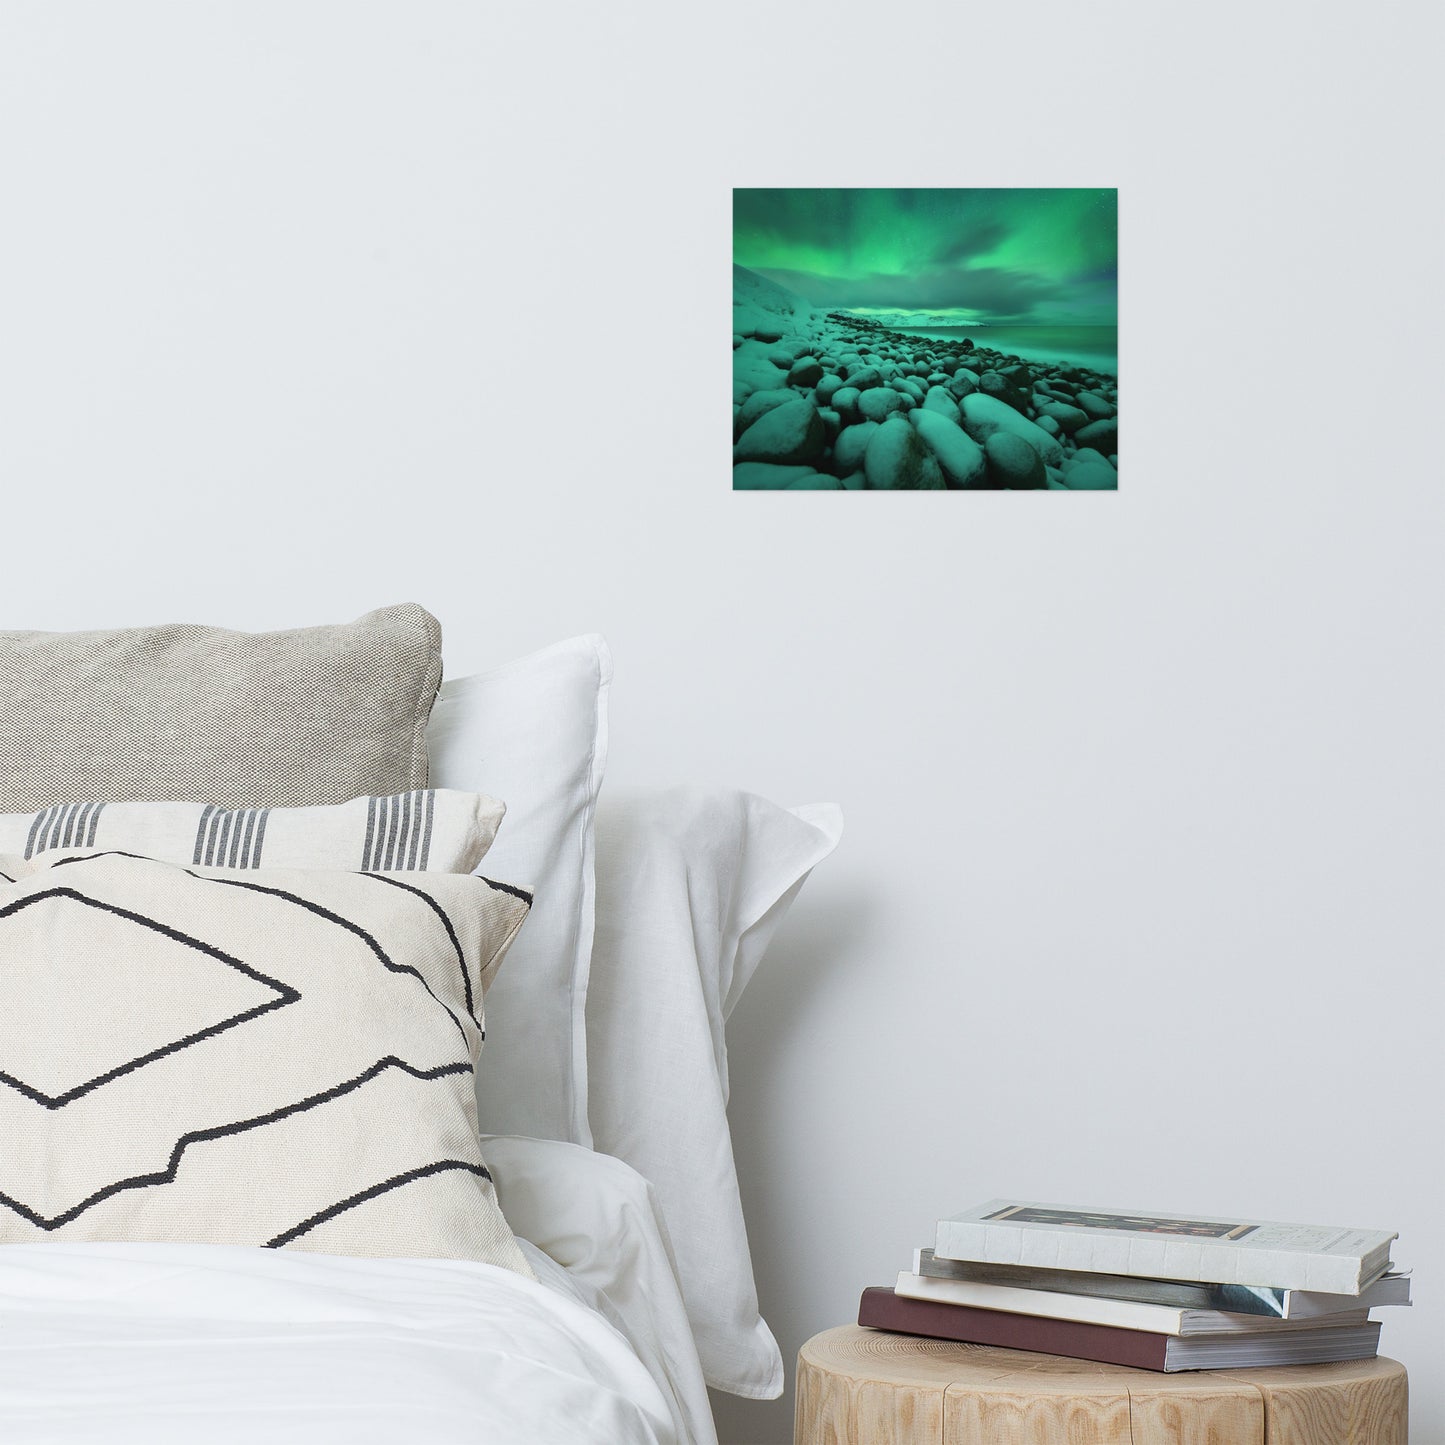 Bedroom Art For Above Bed: Aurora Borealis Over Ocean in Teriberka Night - Northern Lights - Seascape - Rural / Country Style Landscape / Nature Loose / Unframed / Frameless / Frameable Photograph Wall Art Print - Artwork